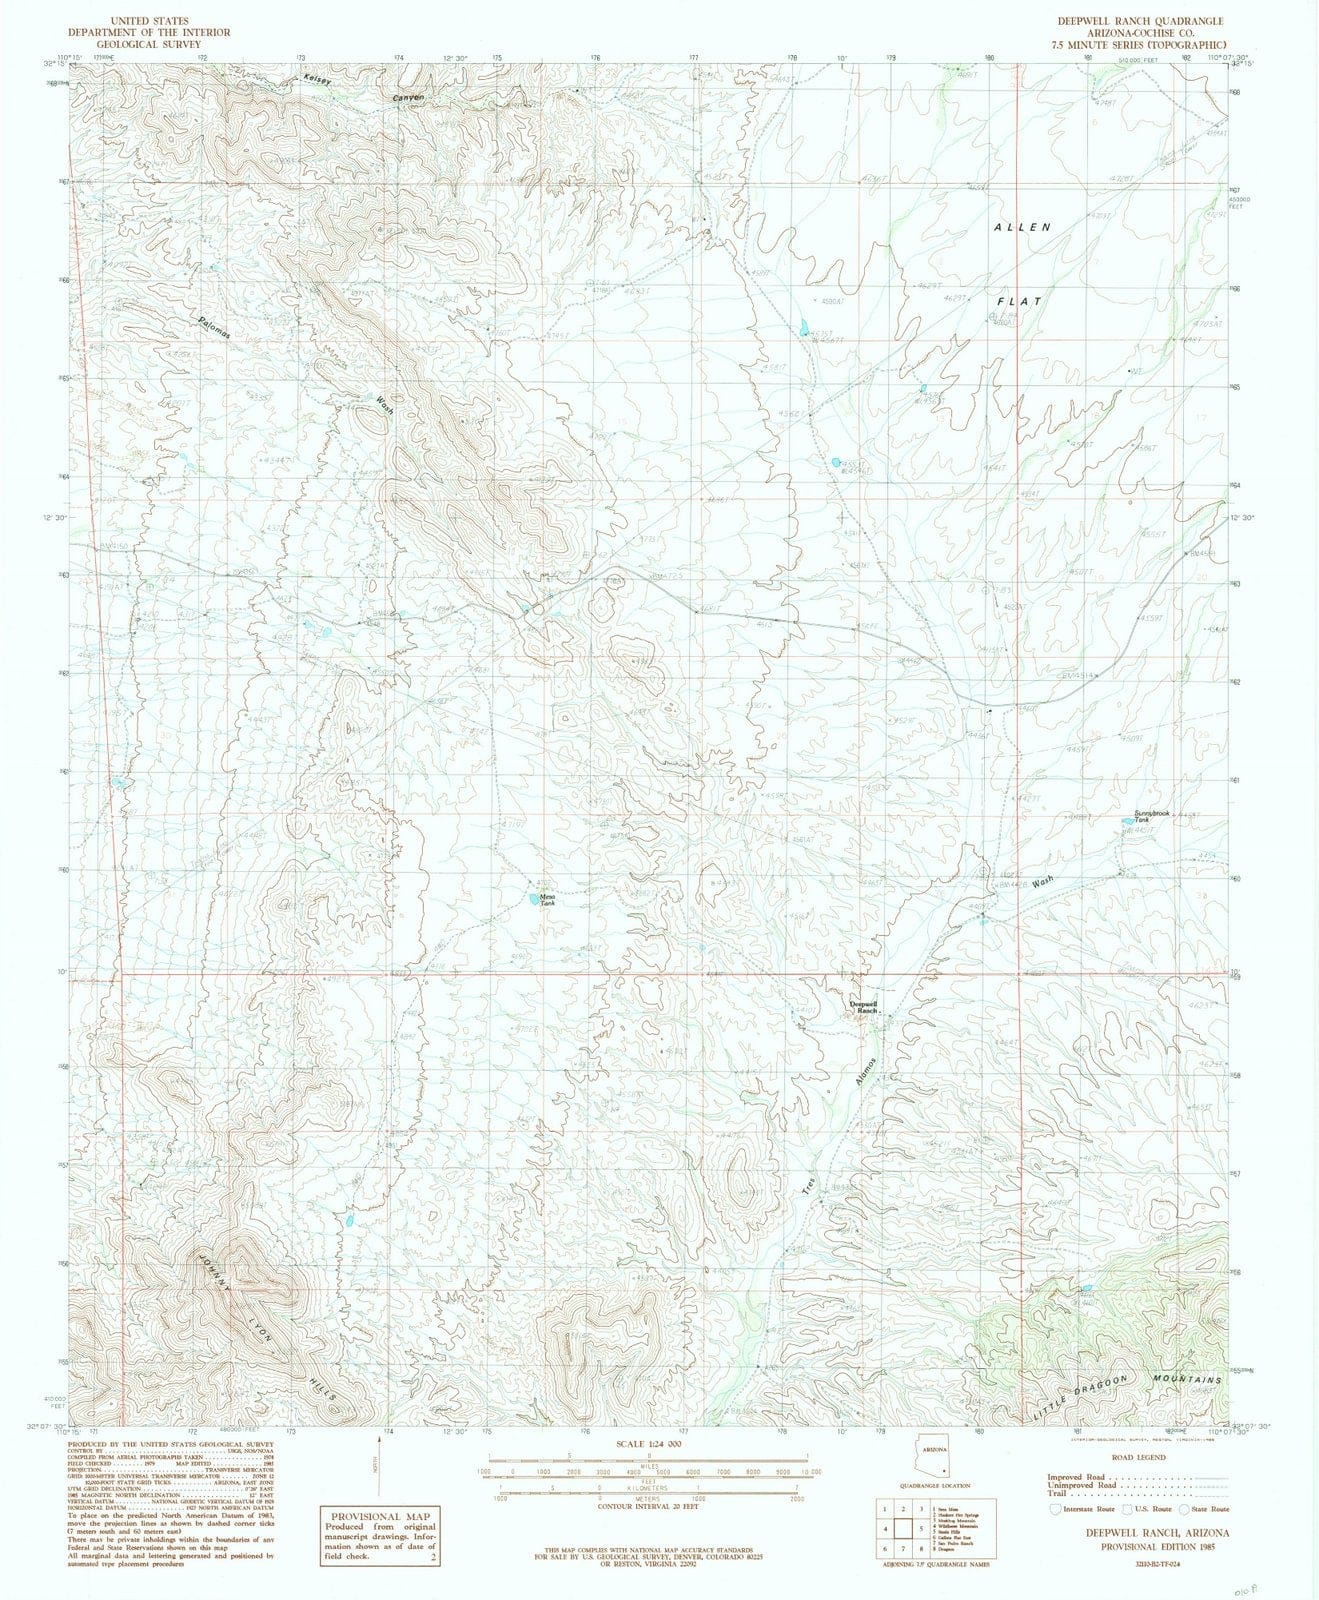 1985 Deepwell Ranch, AZ - Arizona - USGS Topographic Map